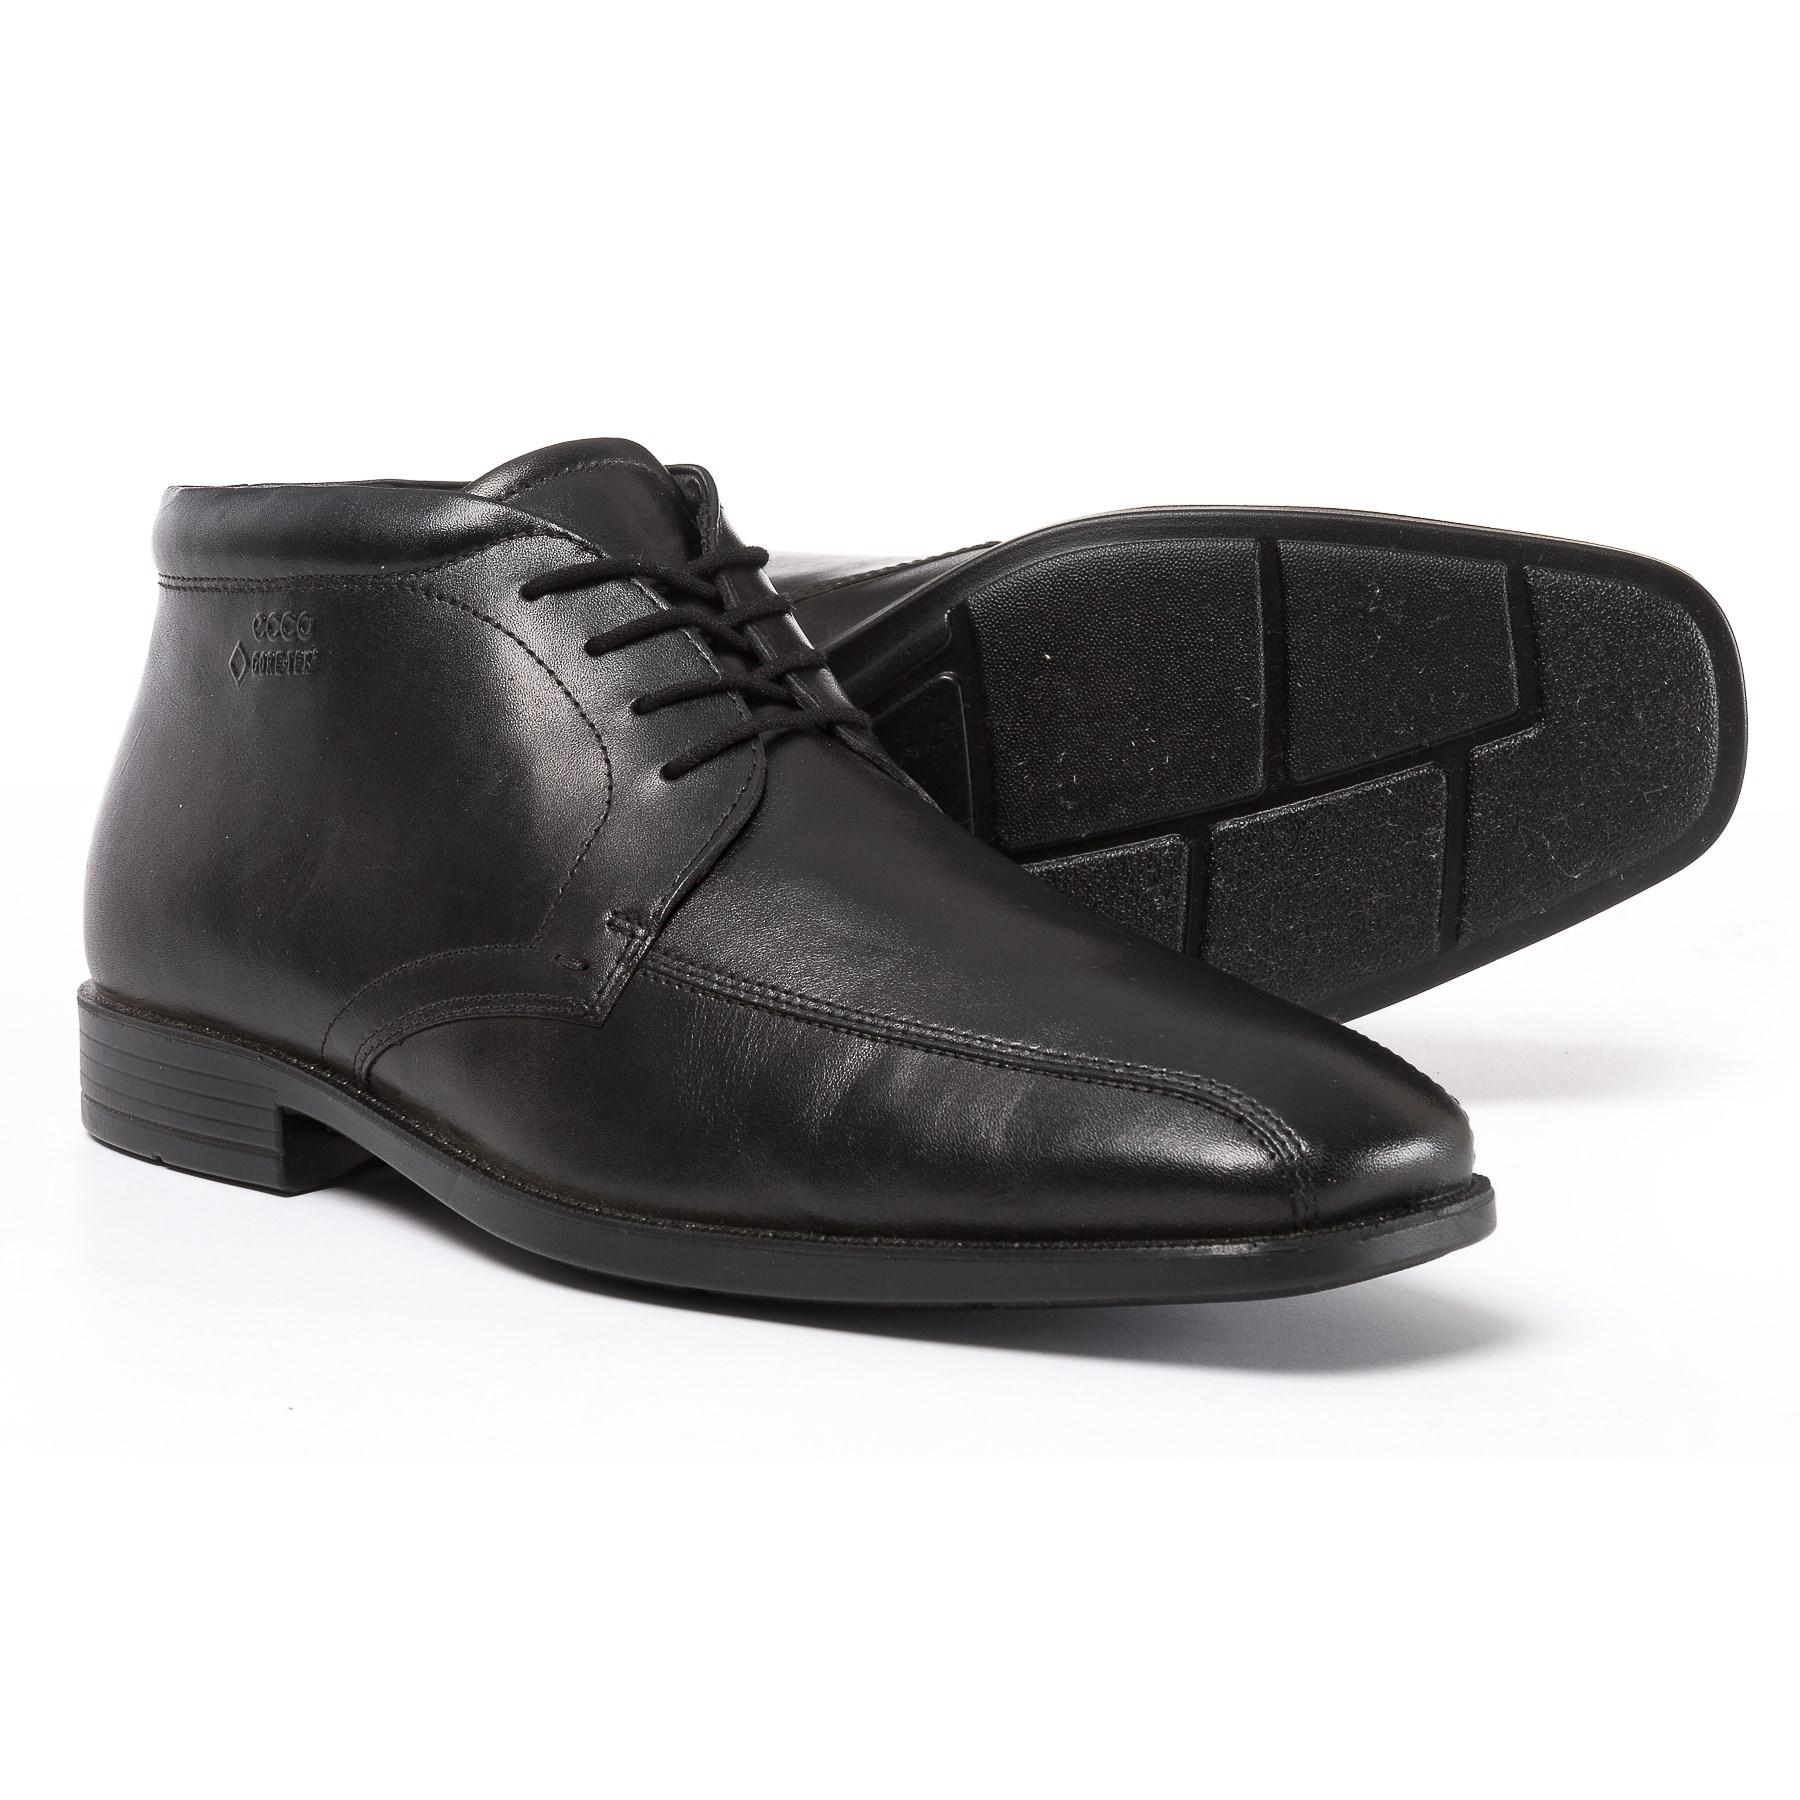 Ecco Leather Edinburgh Chukka Gore-tex® Boots in Black for Men - Lyst